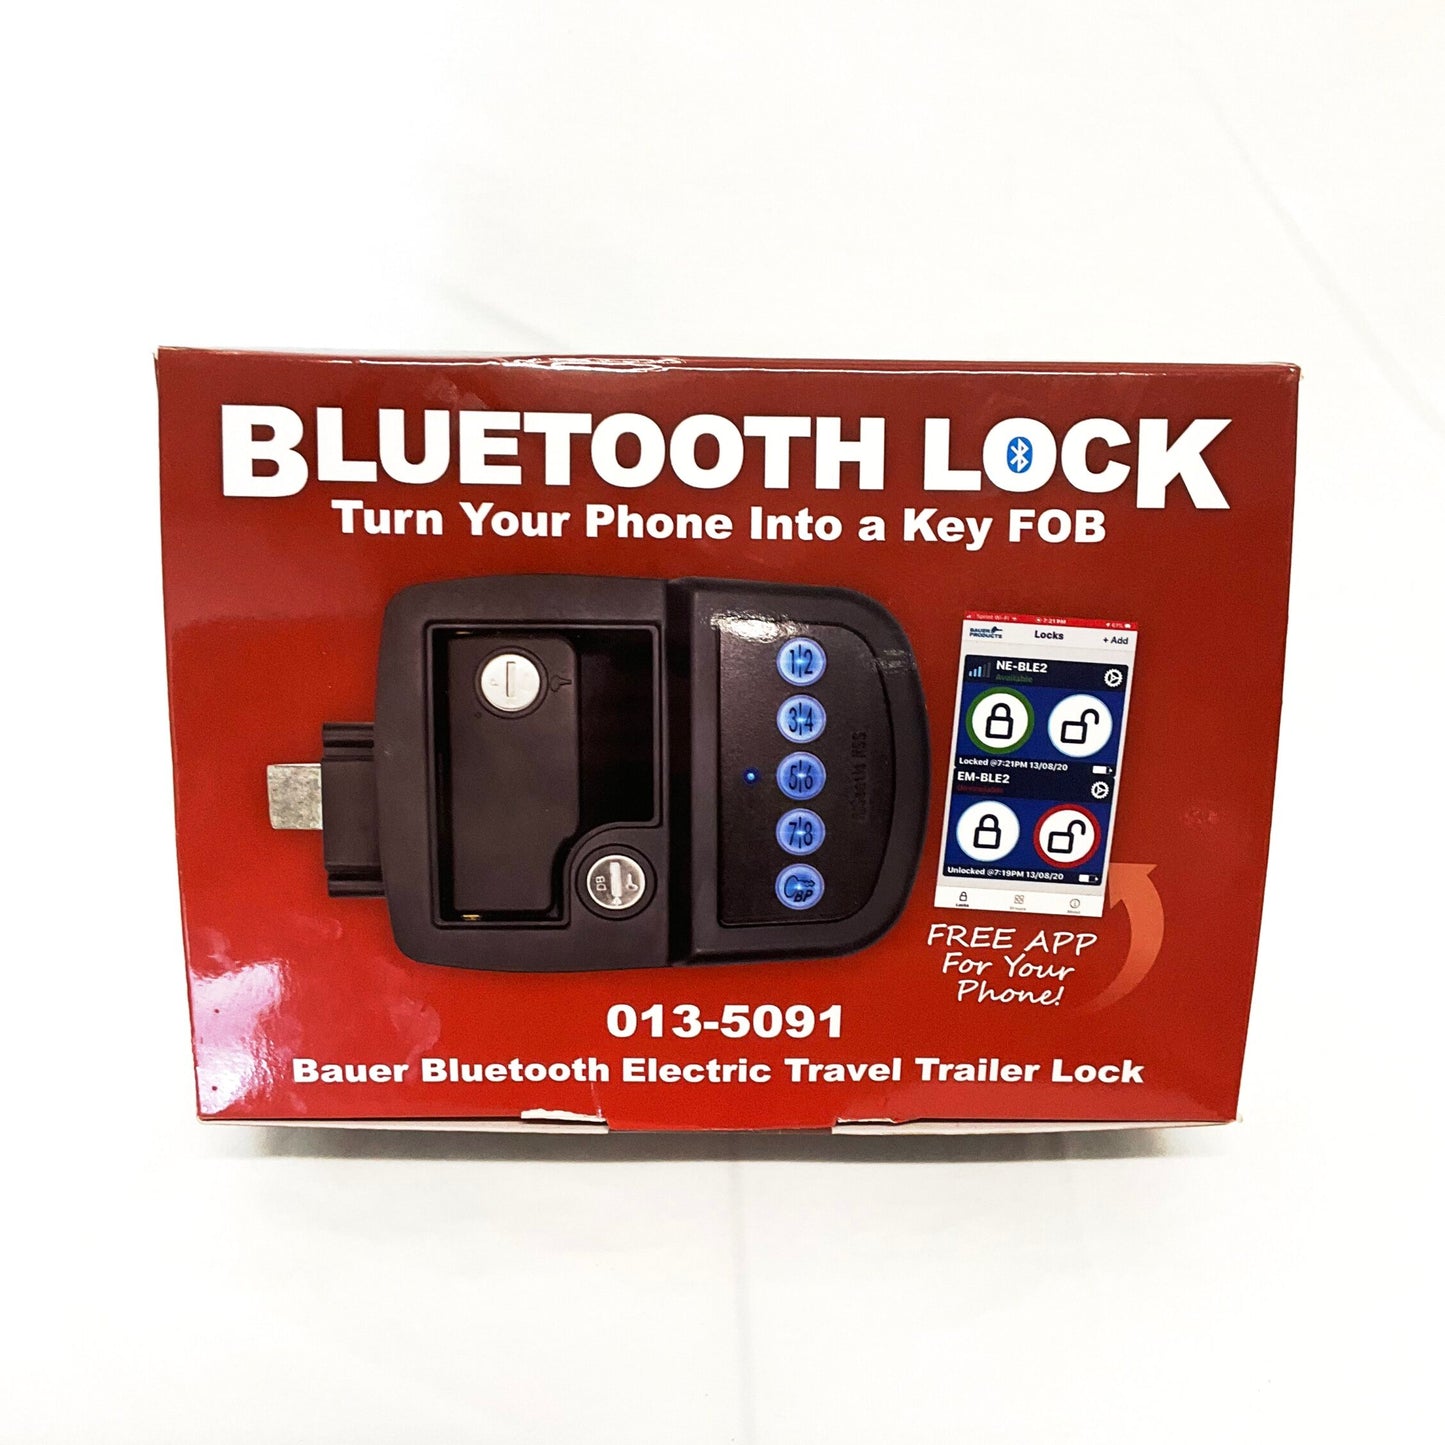 Bauer Bluetooth Electric Travel Trailer Lock